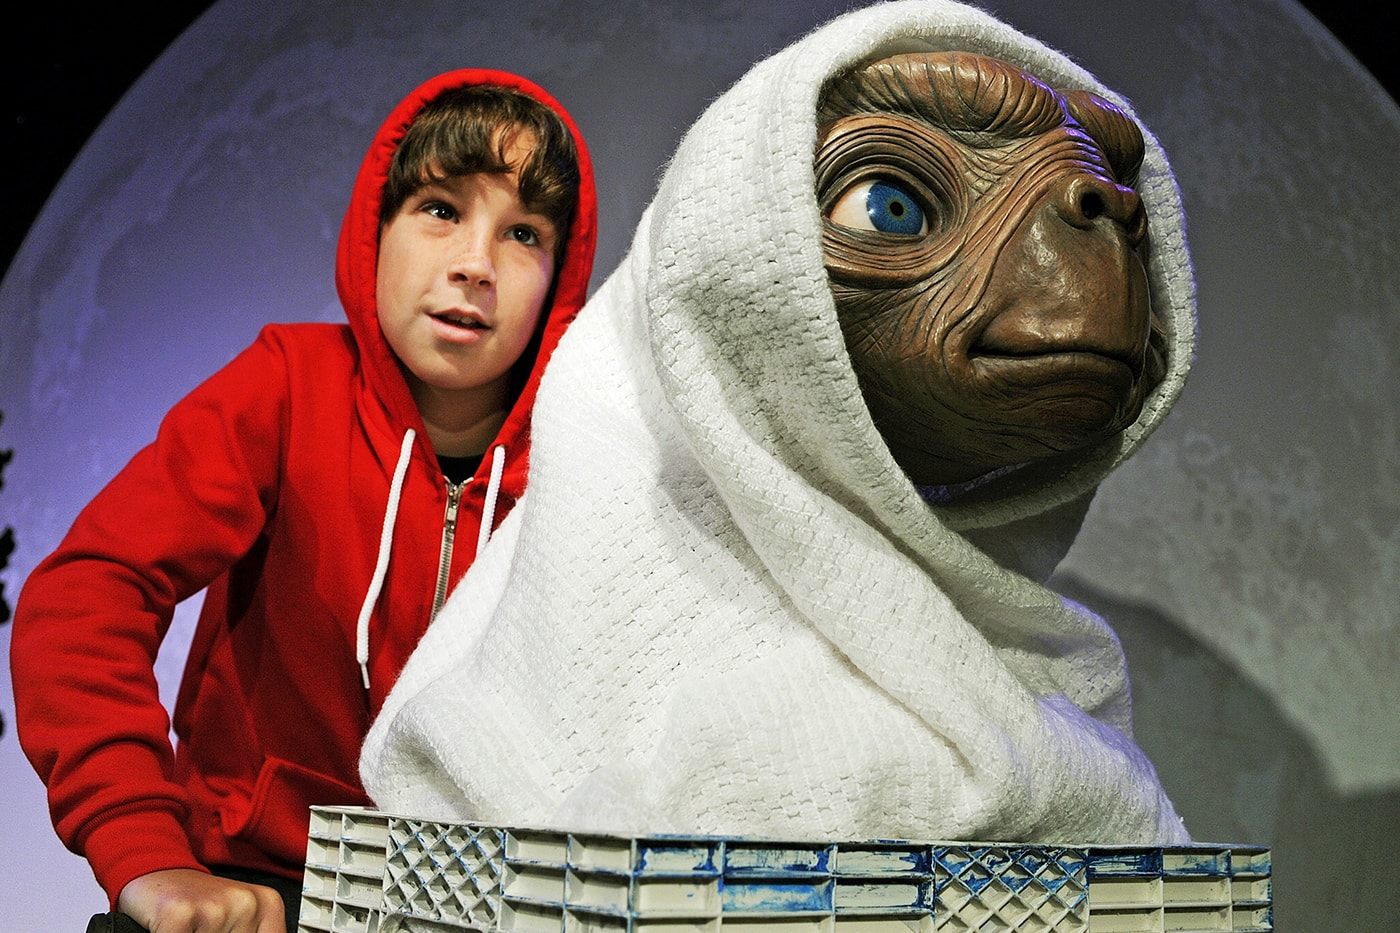 E.T. Model steven spielberg movie 2 5 million usd auction